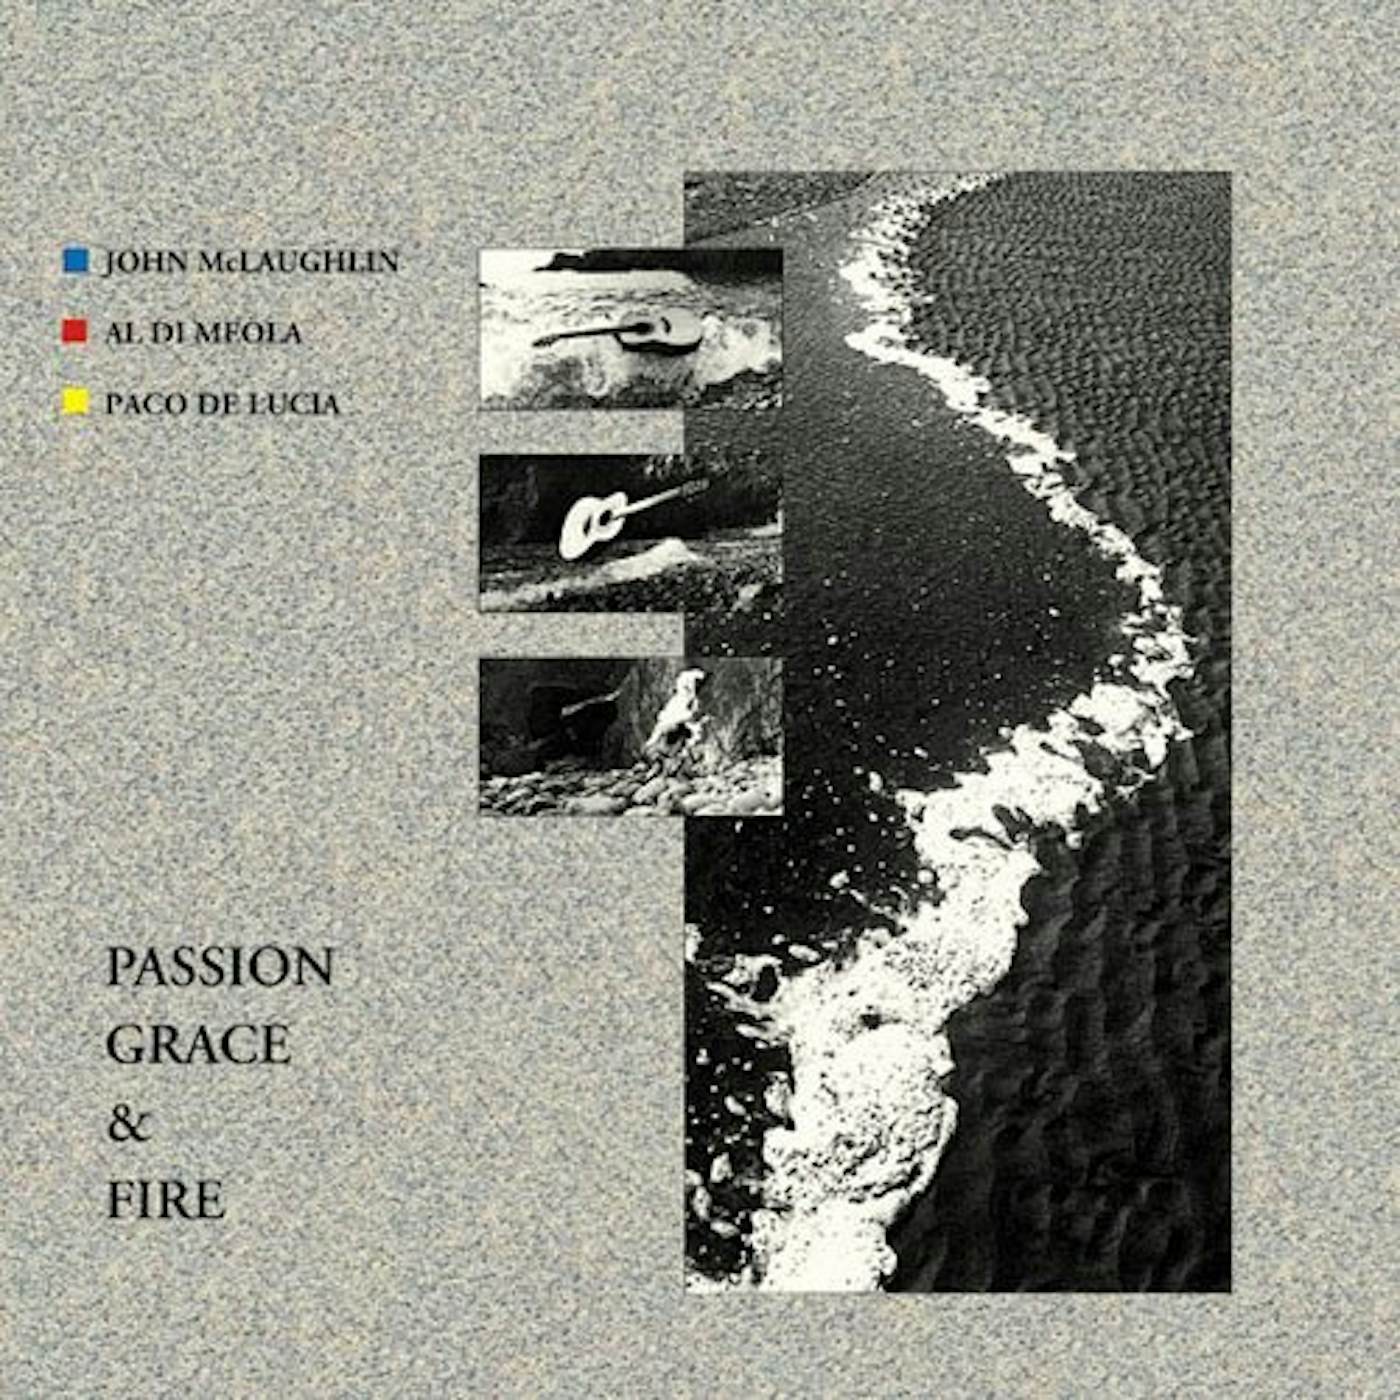 John McLaughlin PASSION GRACE & FIRE CD